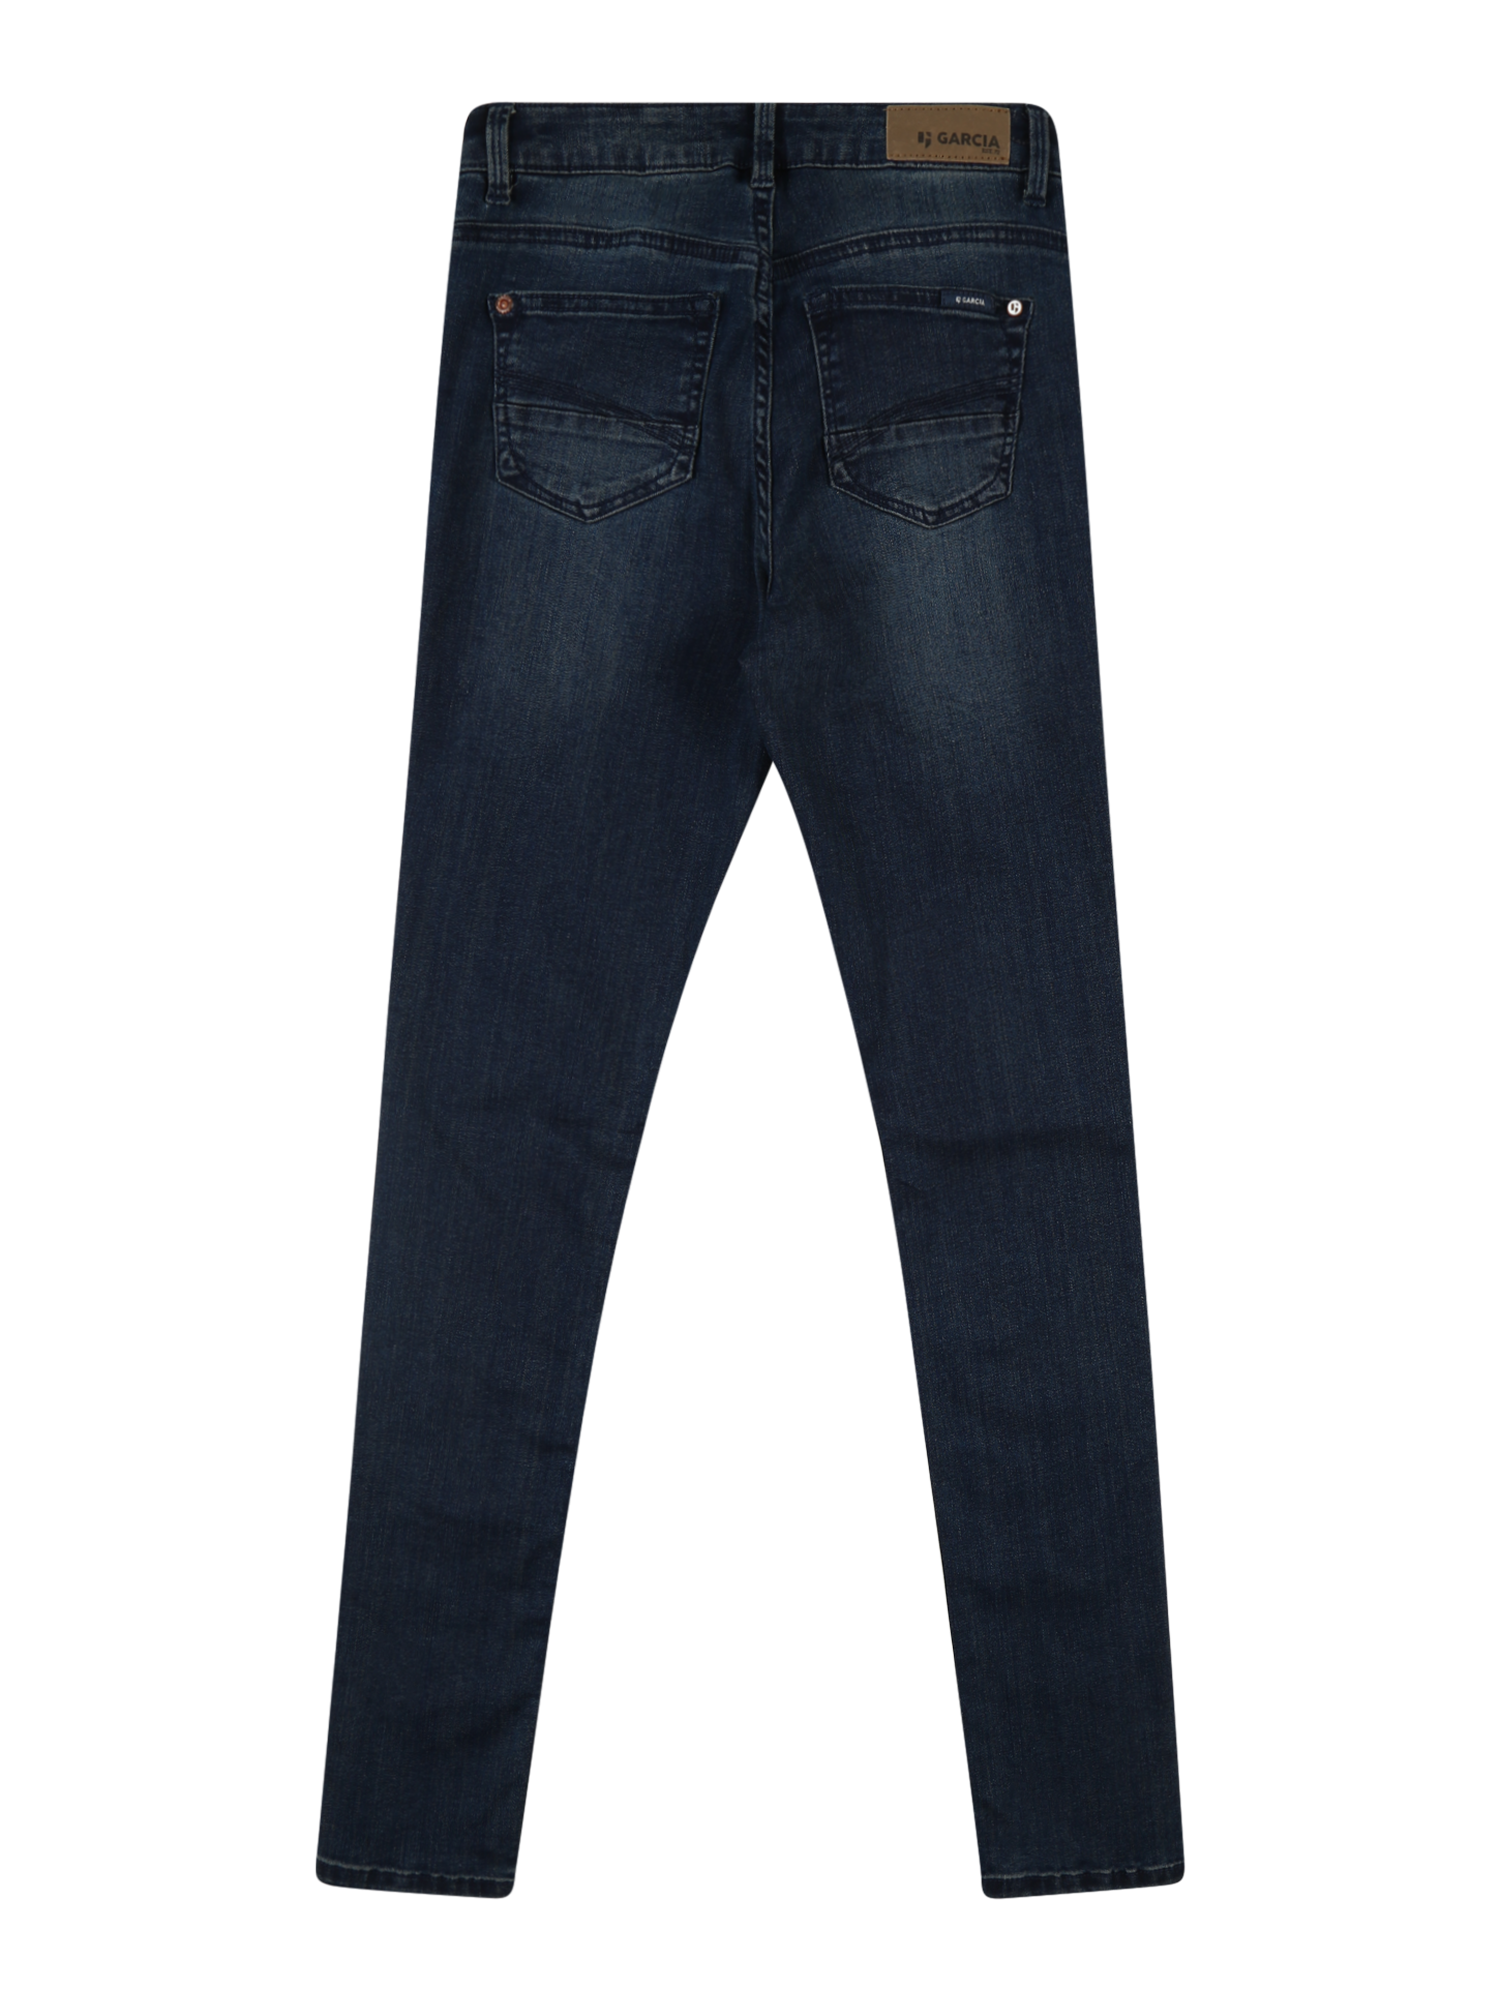 Bimba WUyaR GARCIA Jeans Rianna in Blu Scuro 